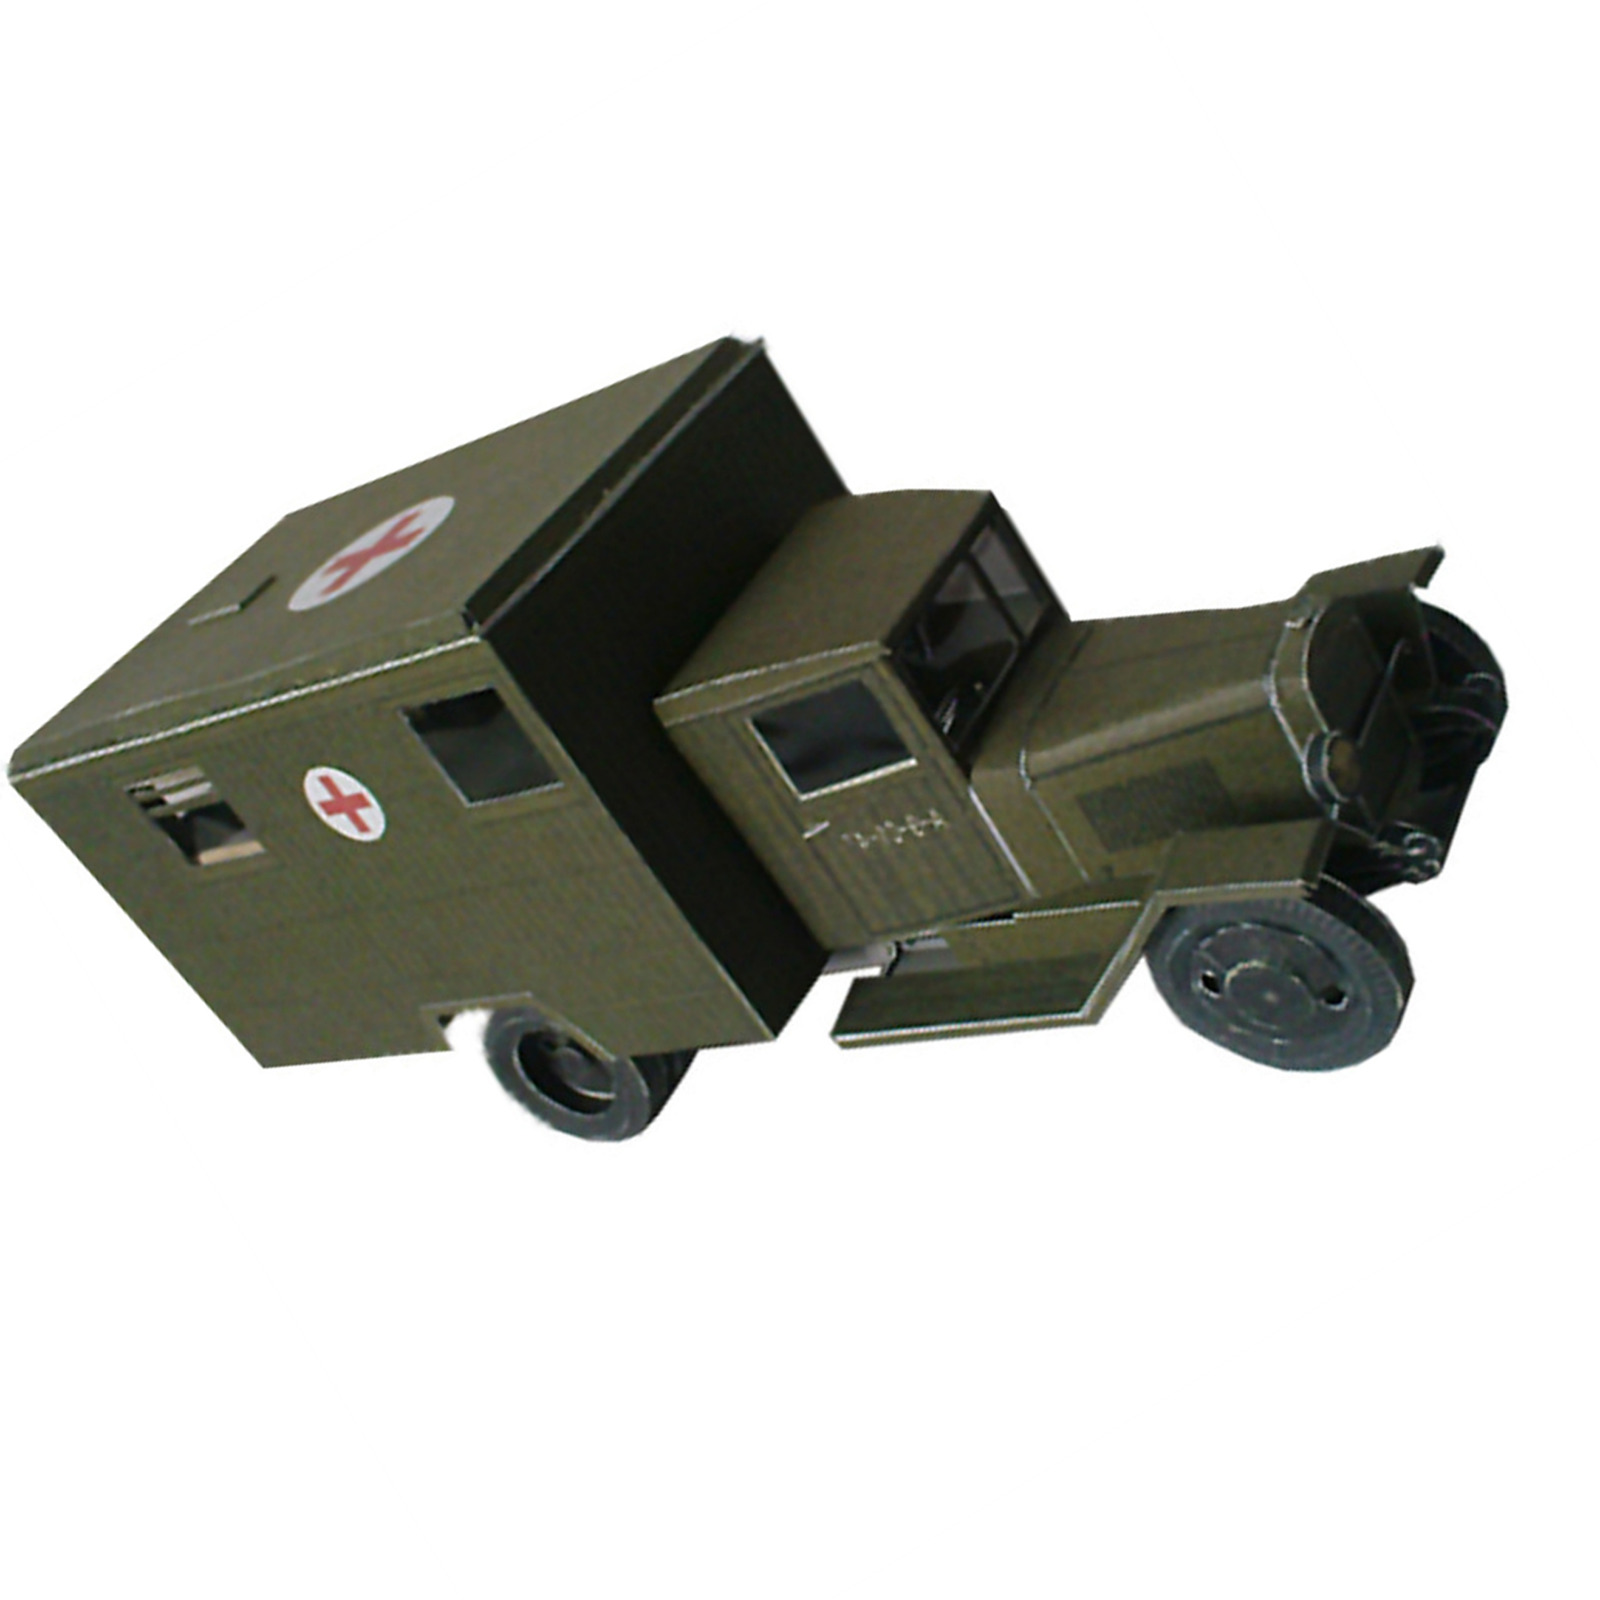 NEW 1:43 WWII Soviet Zis-44 Battlefield Ambulance Army Truck Paper Model DIY Kit